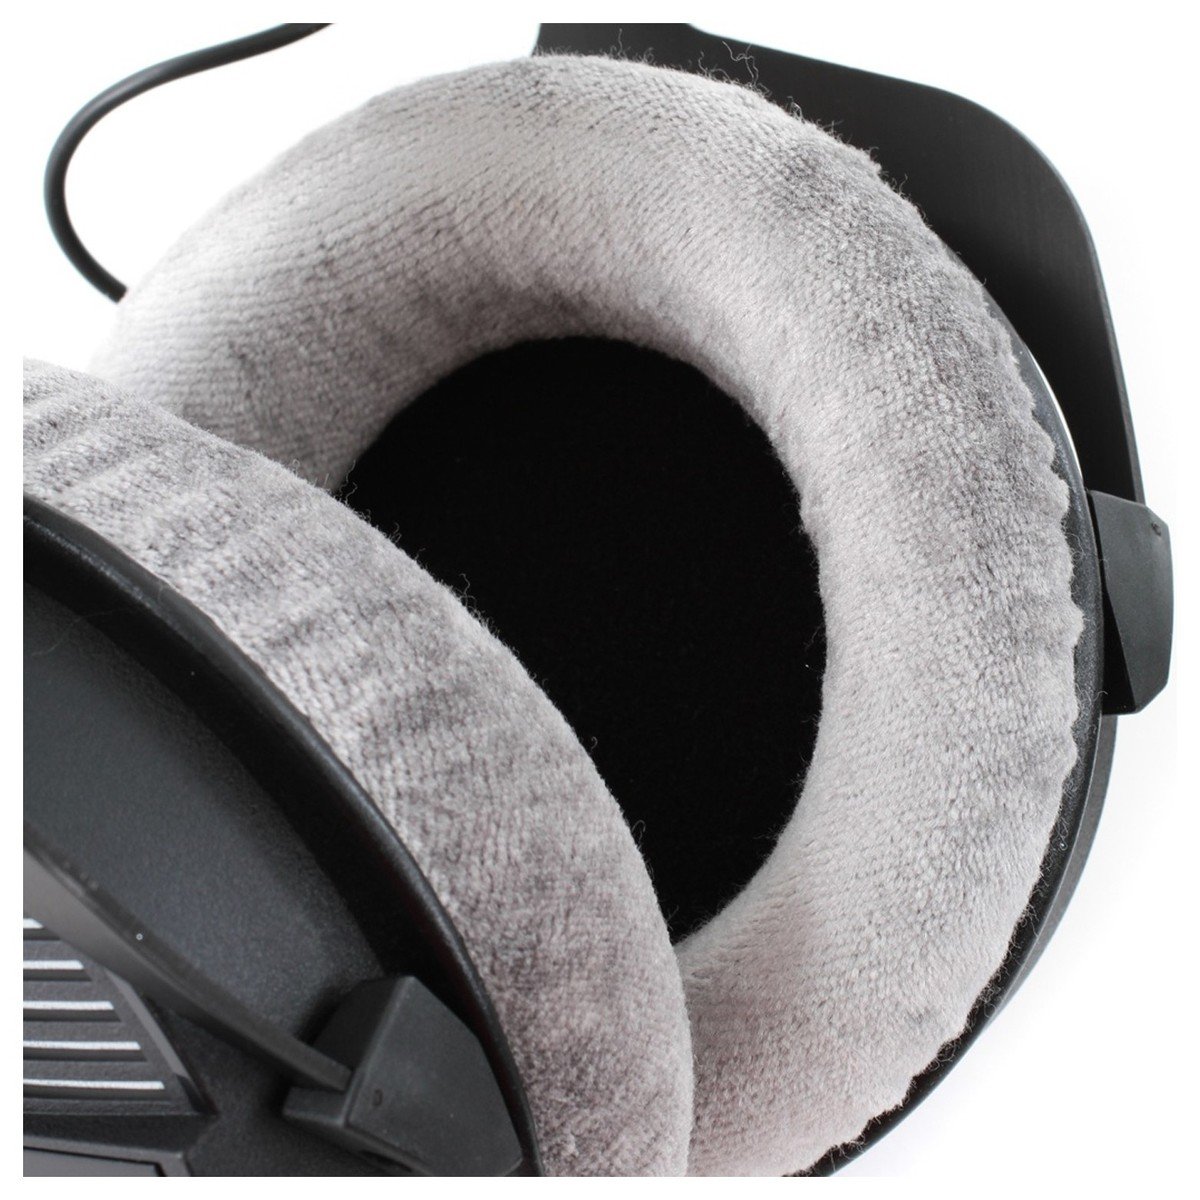 Beyerdynamic DT 990 Pro 250 Ohm Open Back Studio Headphones for Mixing Mastering - DY Pro Audio